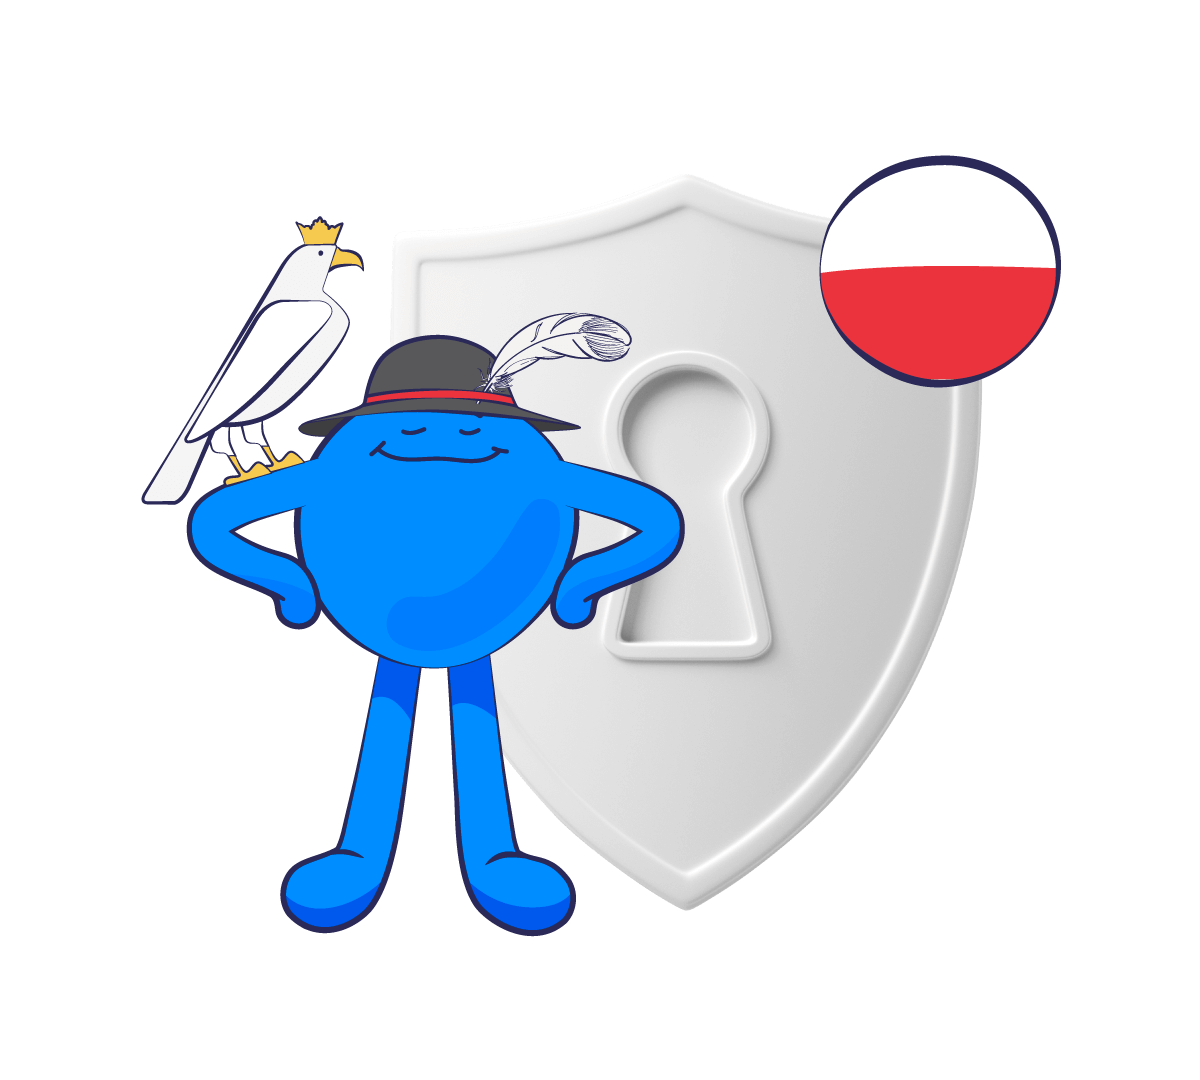 Aim for digital privacy with Polish VPN